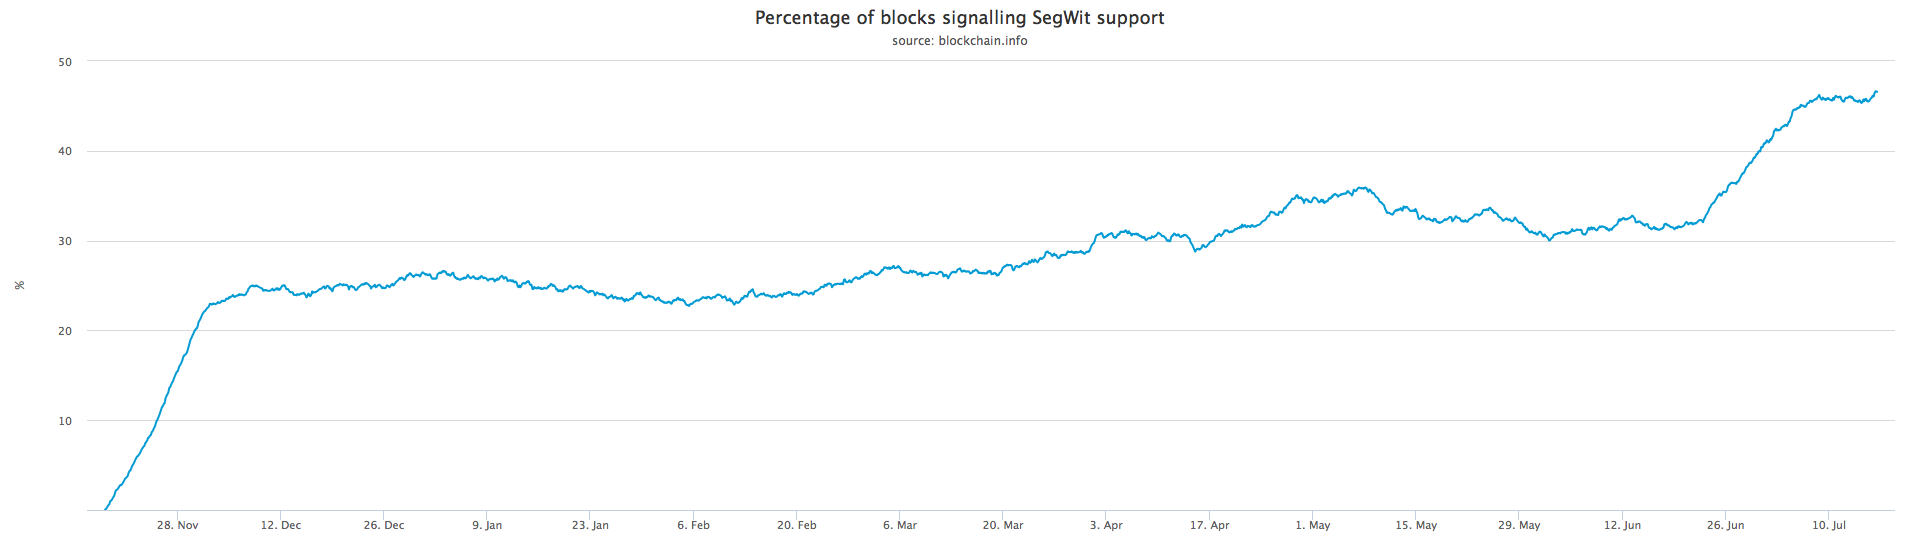 percentage-of-blocks-signalling-segwit-support.png